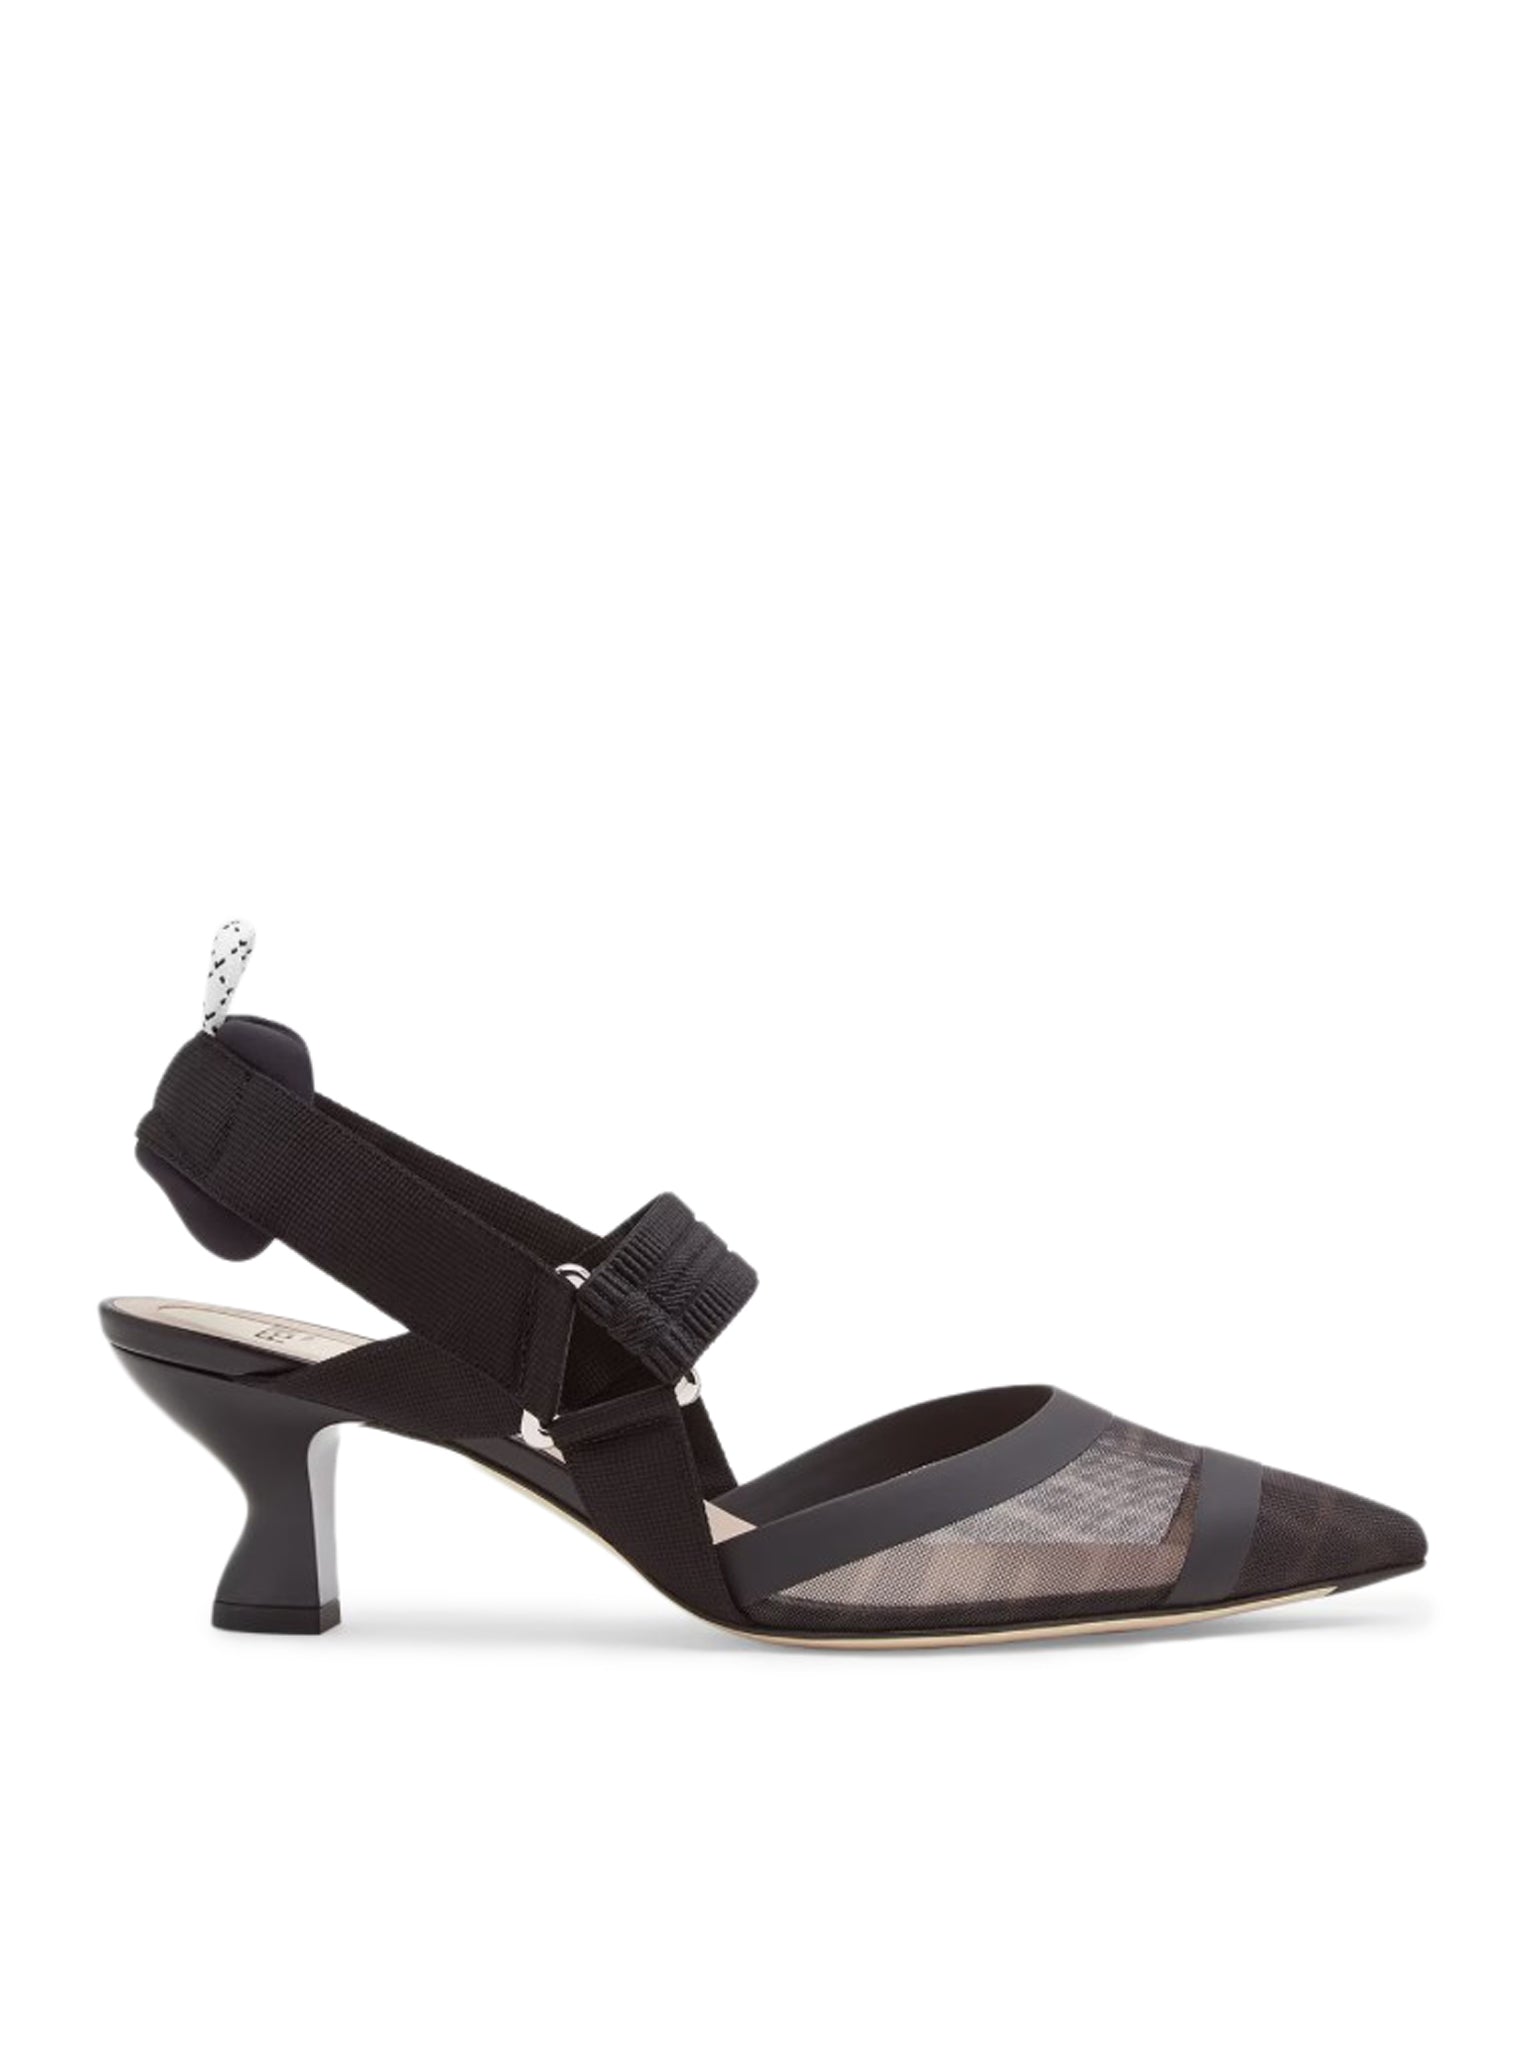 Colibrì medium heel slingback in black mesh and leather